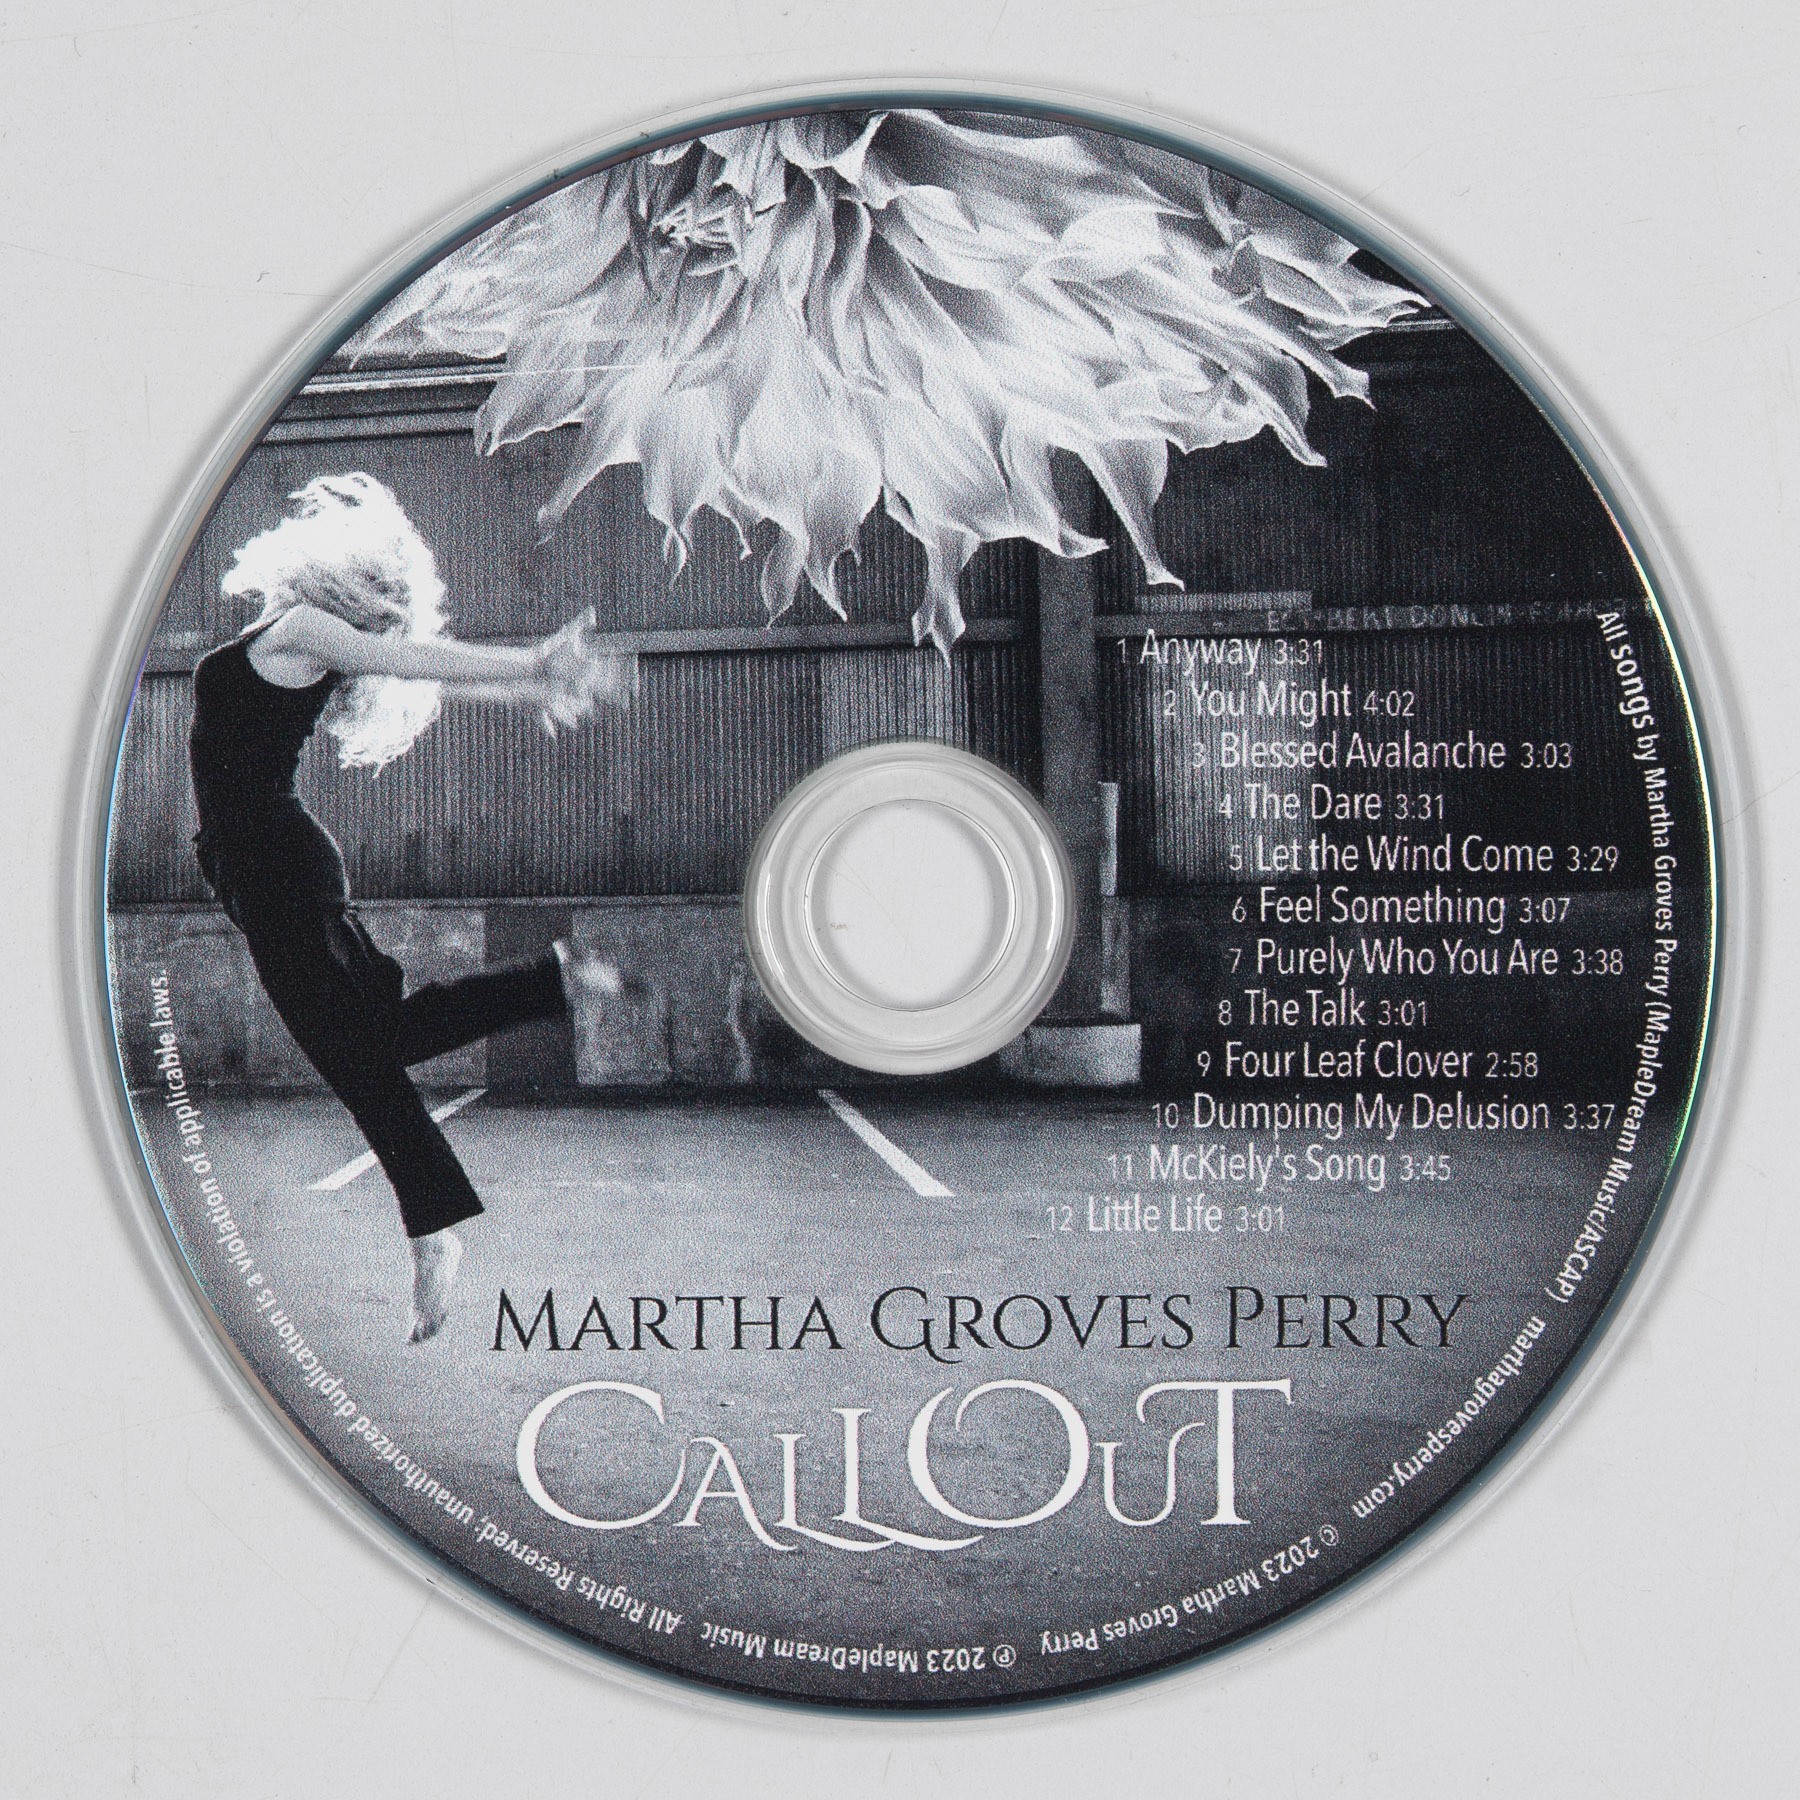 Martha Groves Perry: Callout album cover: Disc